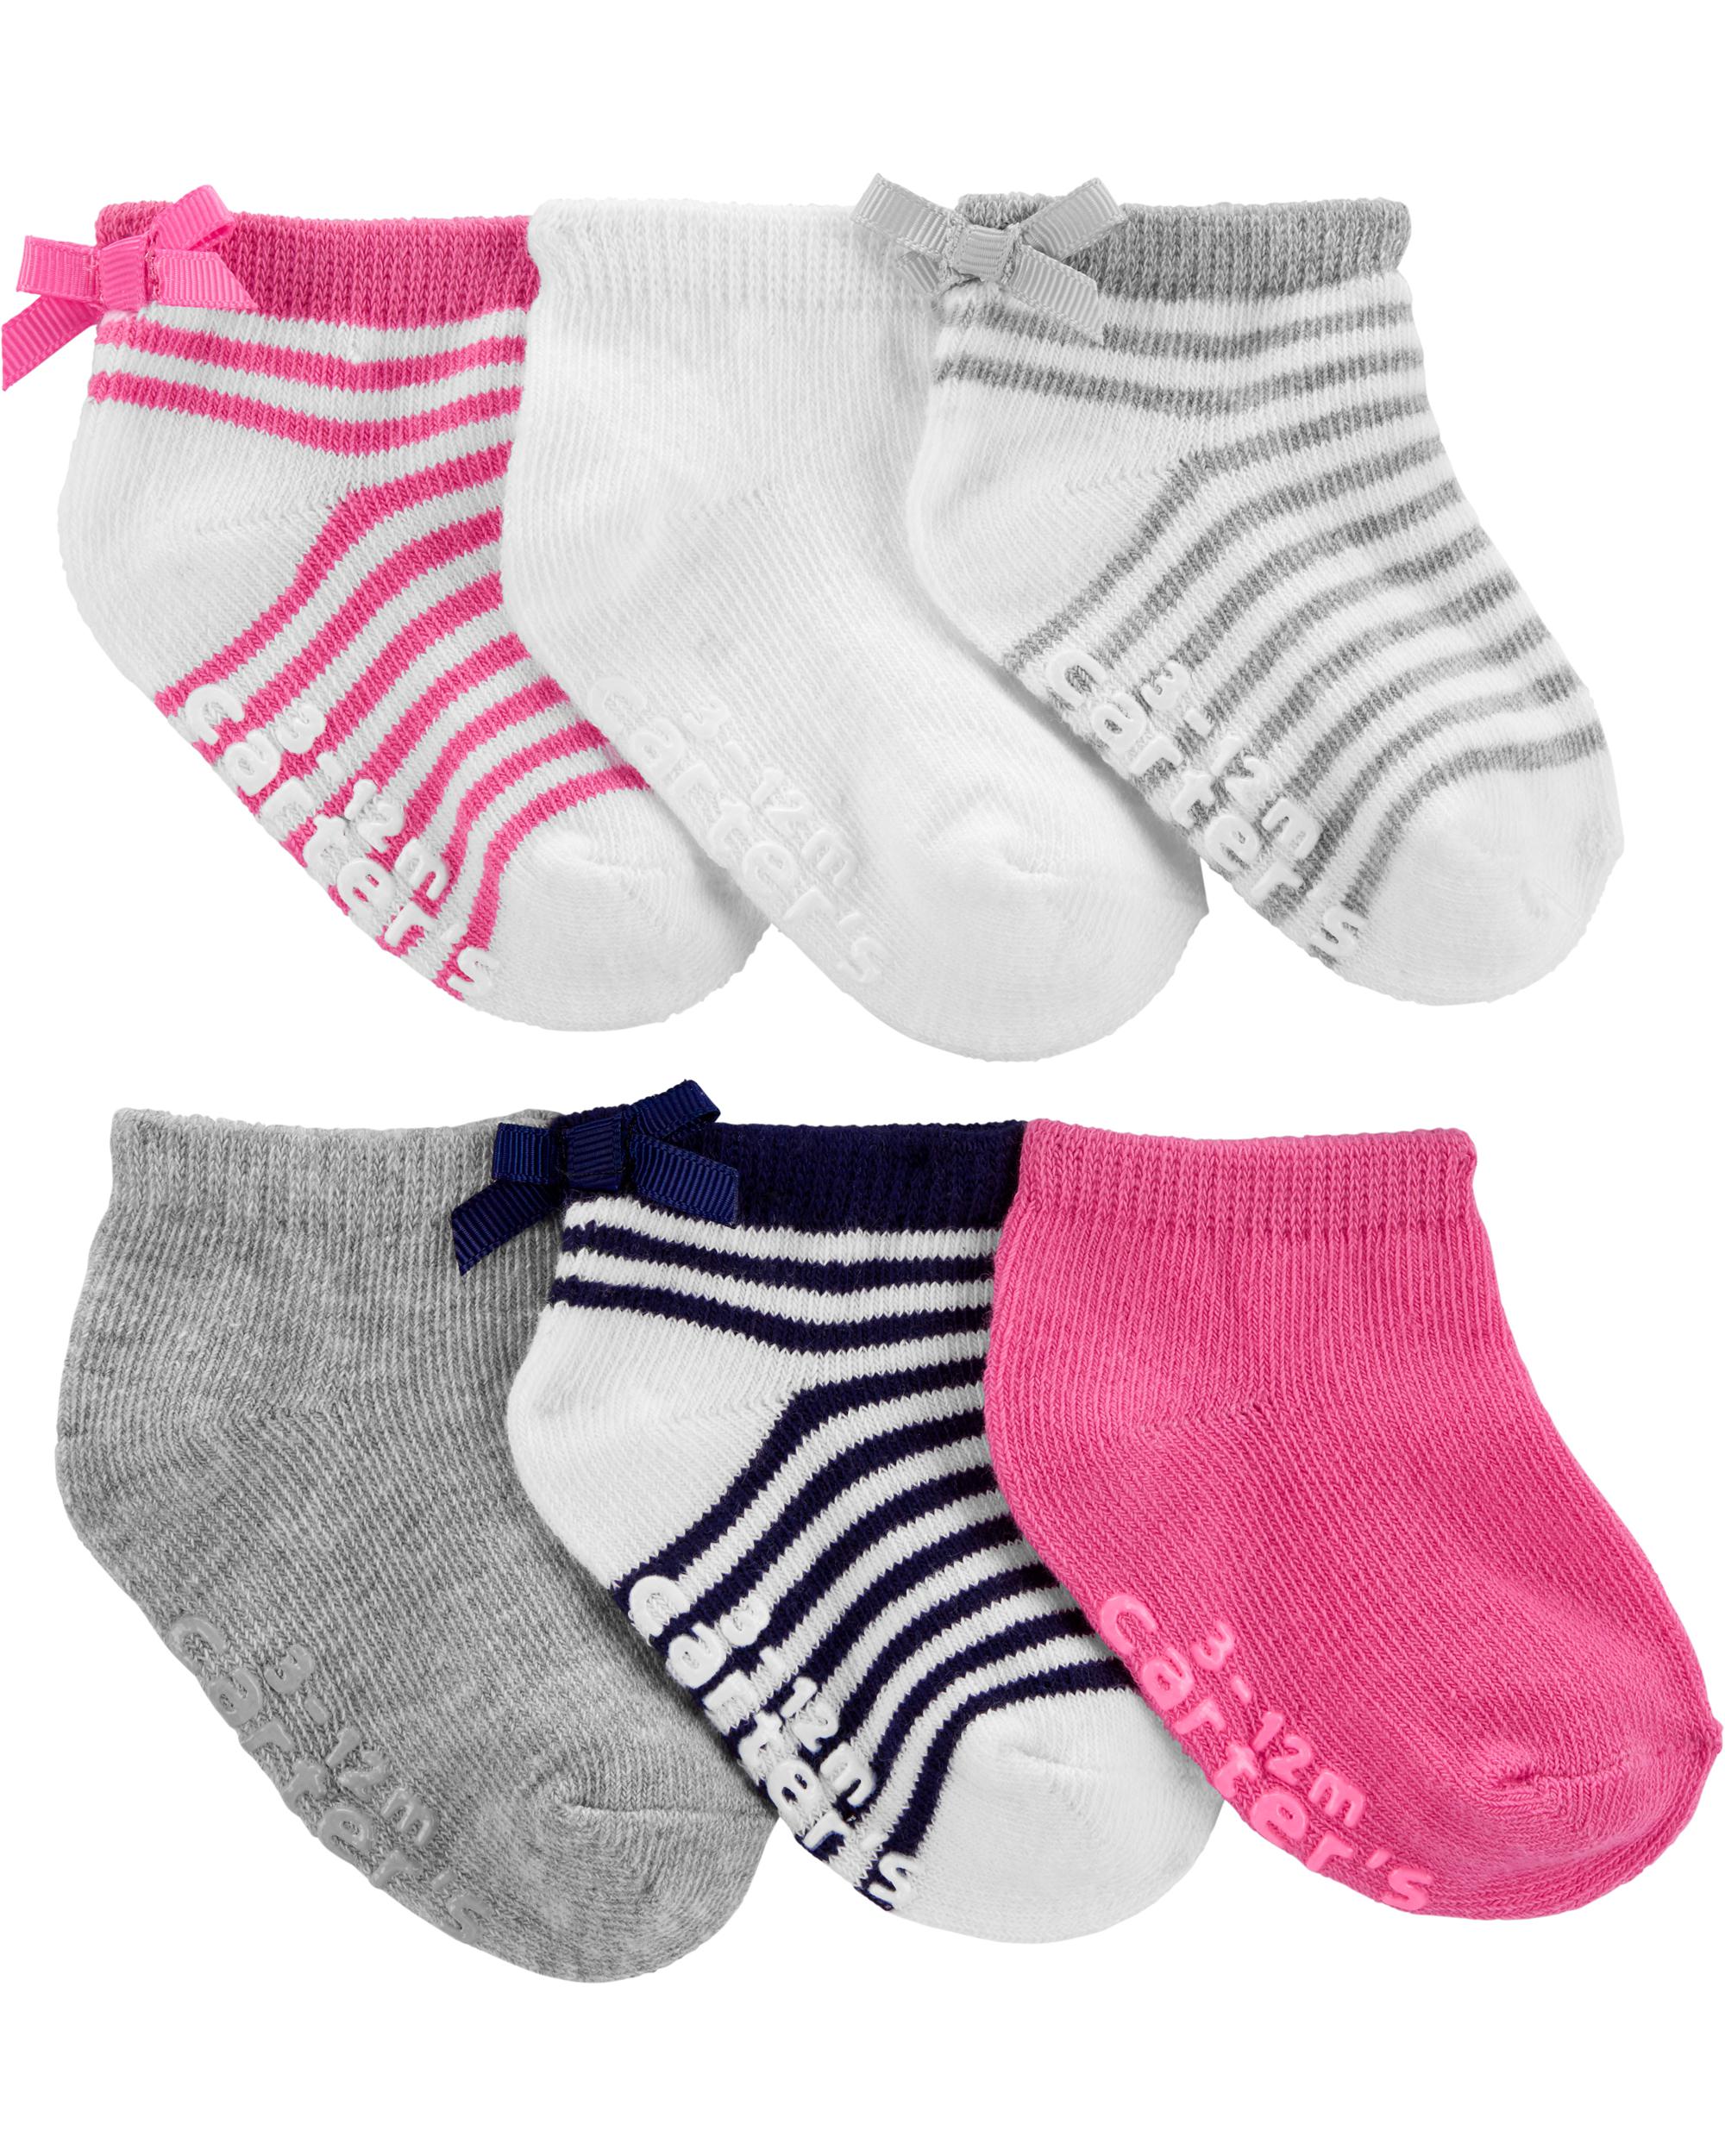 Buy MUKHAKSH (Pack of 1 Pairs = 2 Socks Girls White Stocking (Free